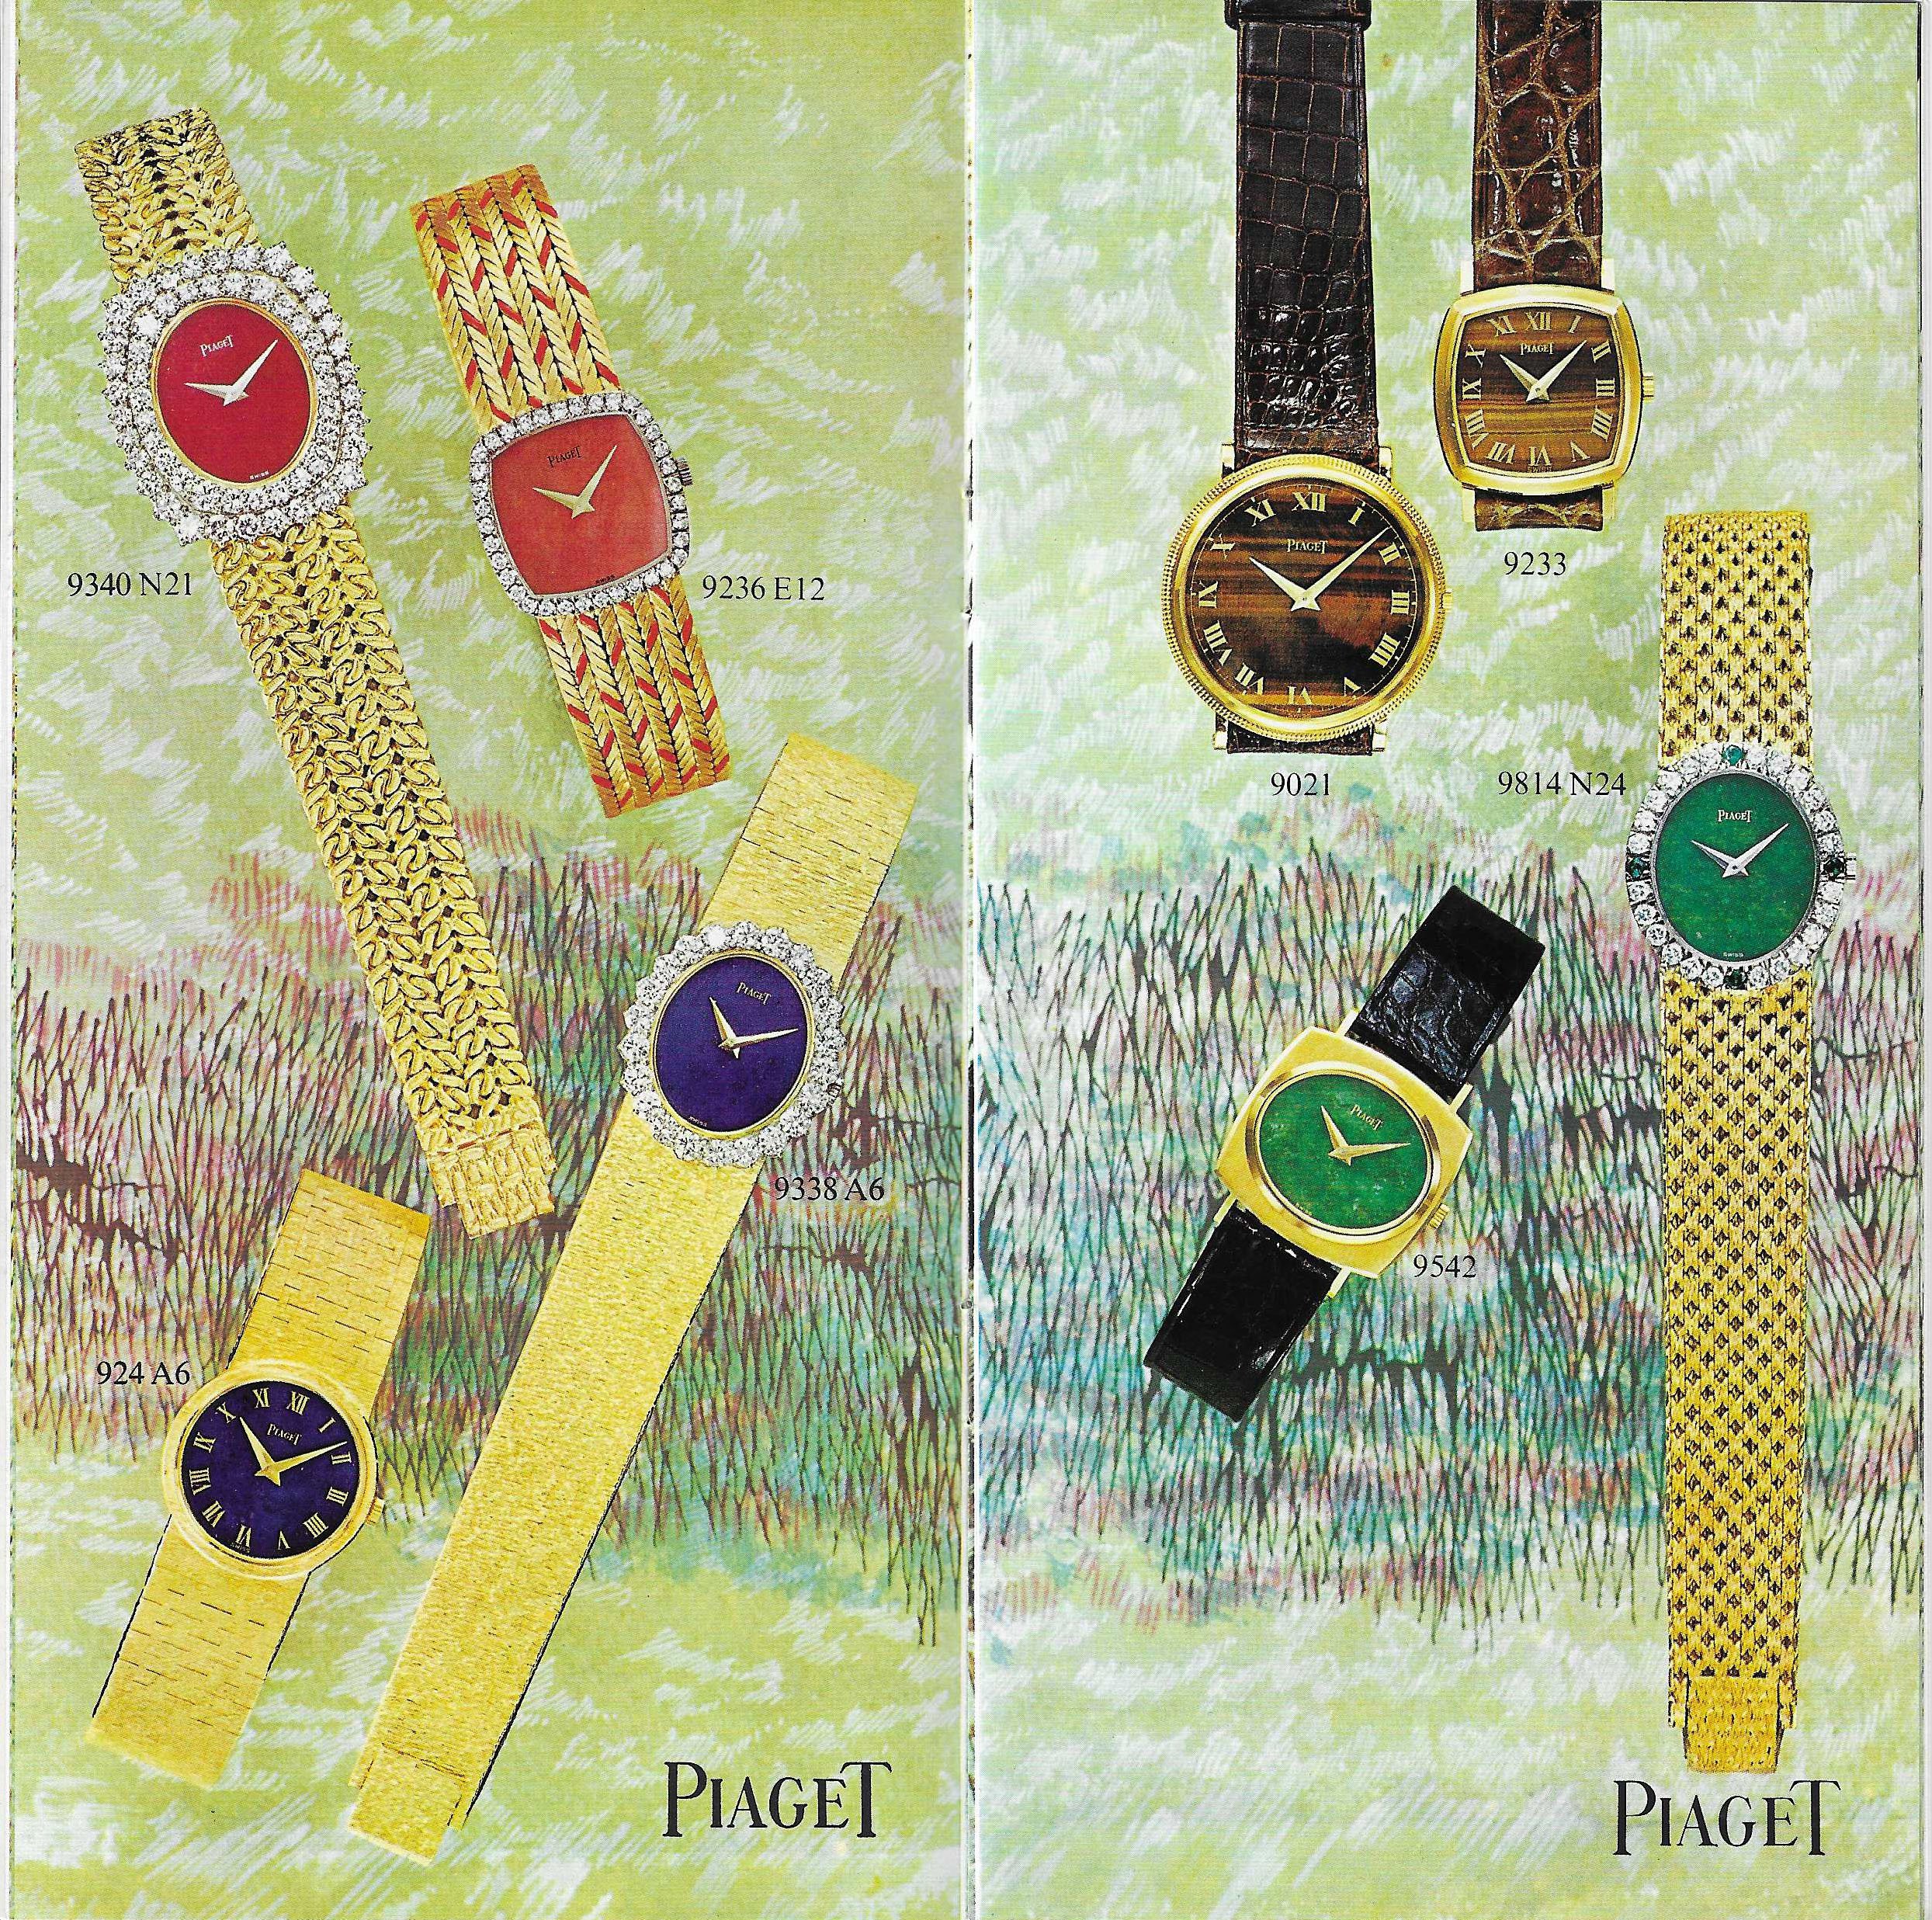 Piaget Brochure No. 12 Est. early 70's